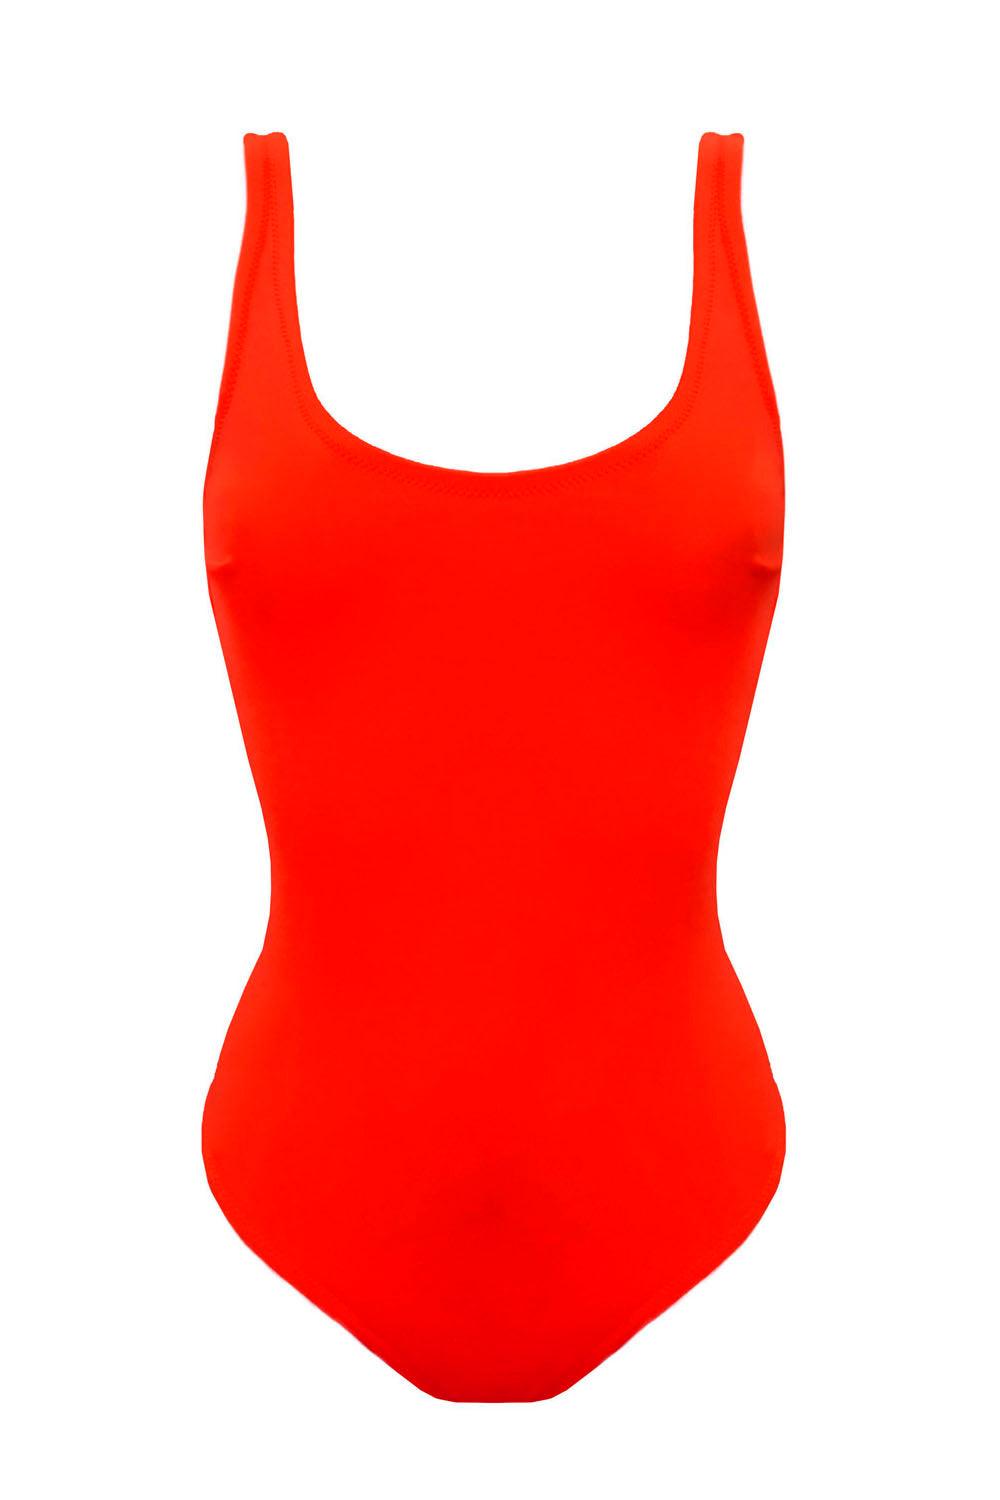 Malibu Hot Red swimsuit - One Piece swimsuit by Love Jilty. Shop on yesUndress